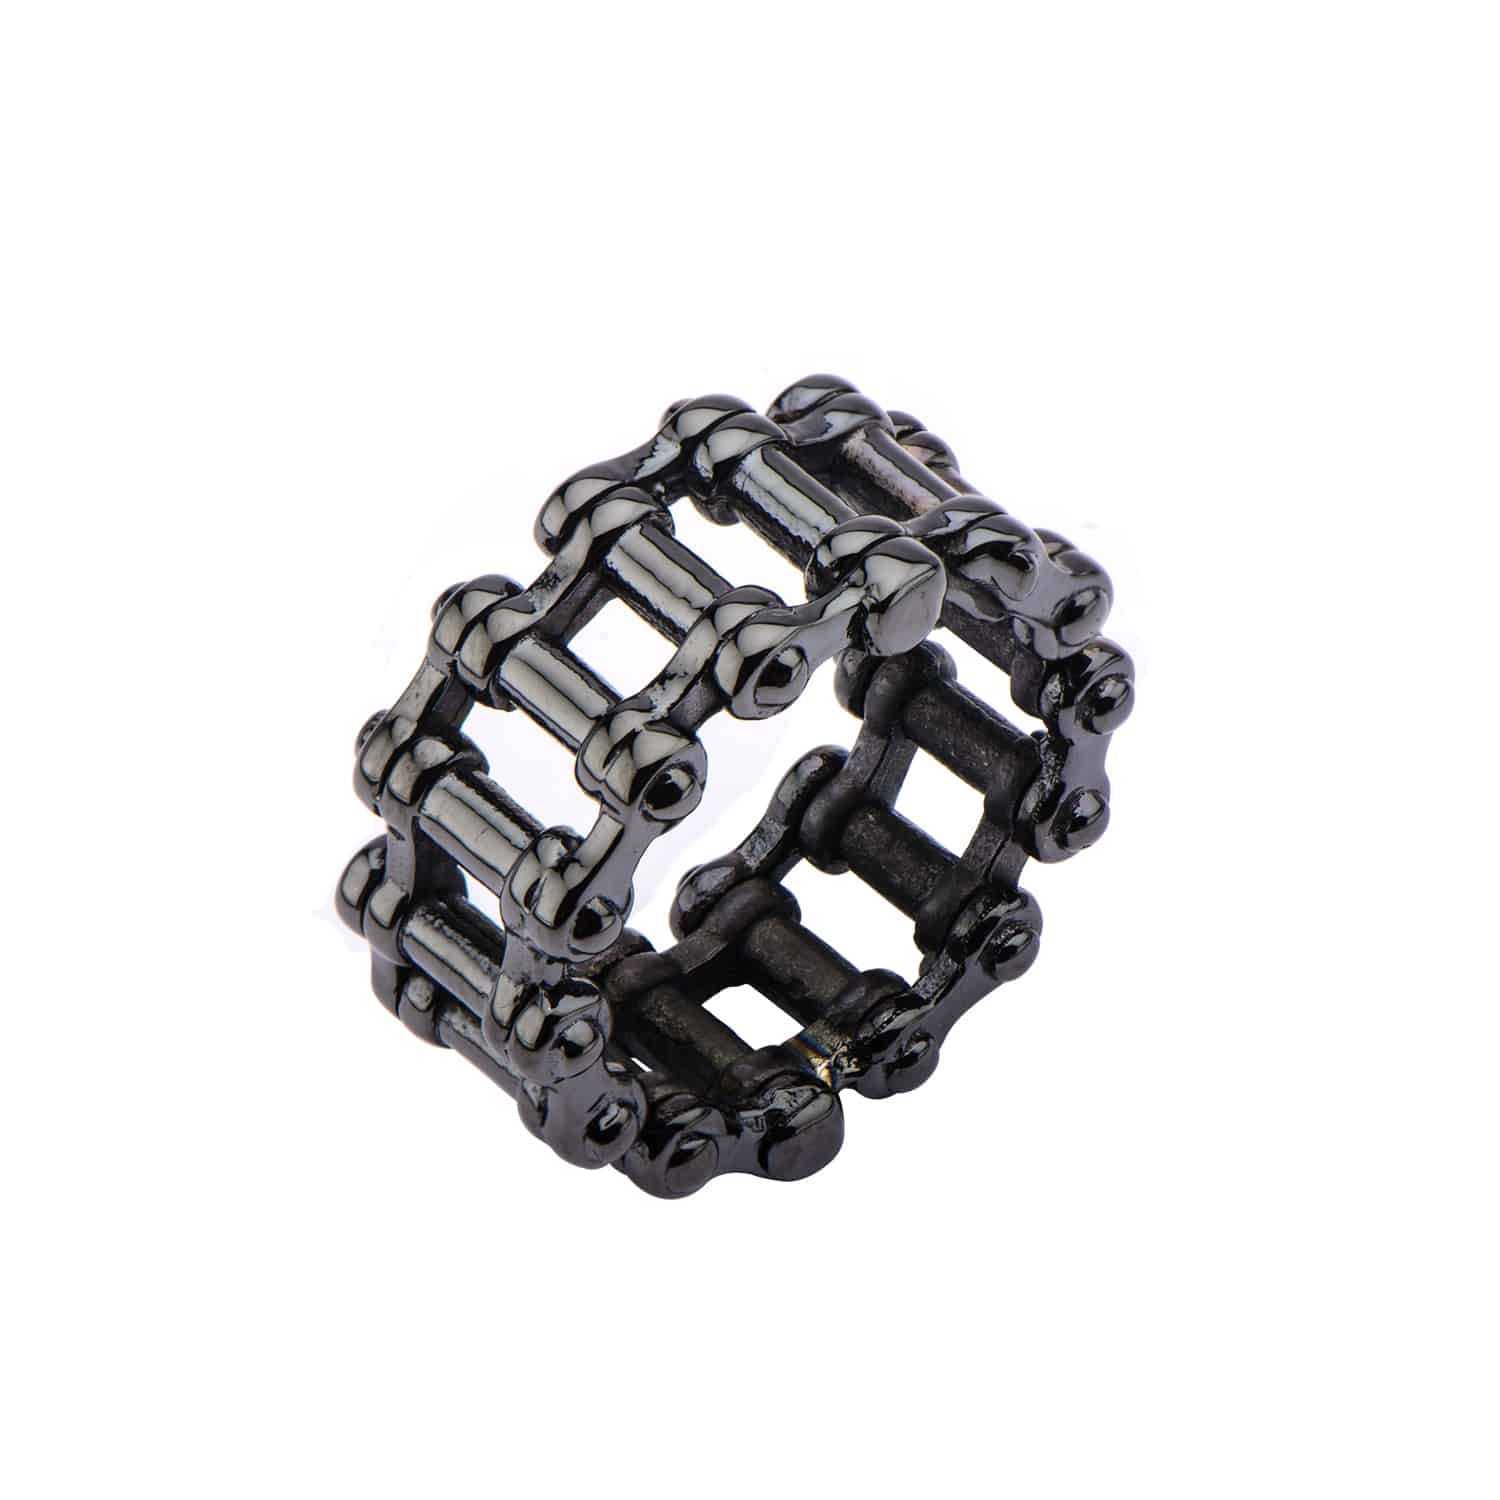 INOX Men's Stainless Steel Motor Chain Ring, Size 11